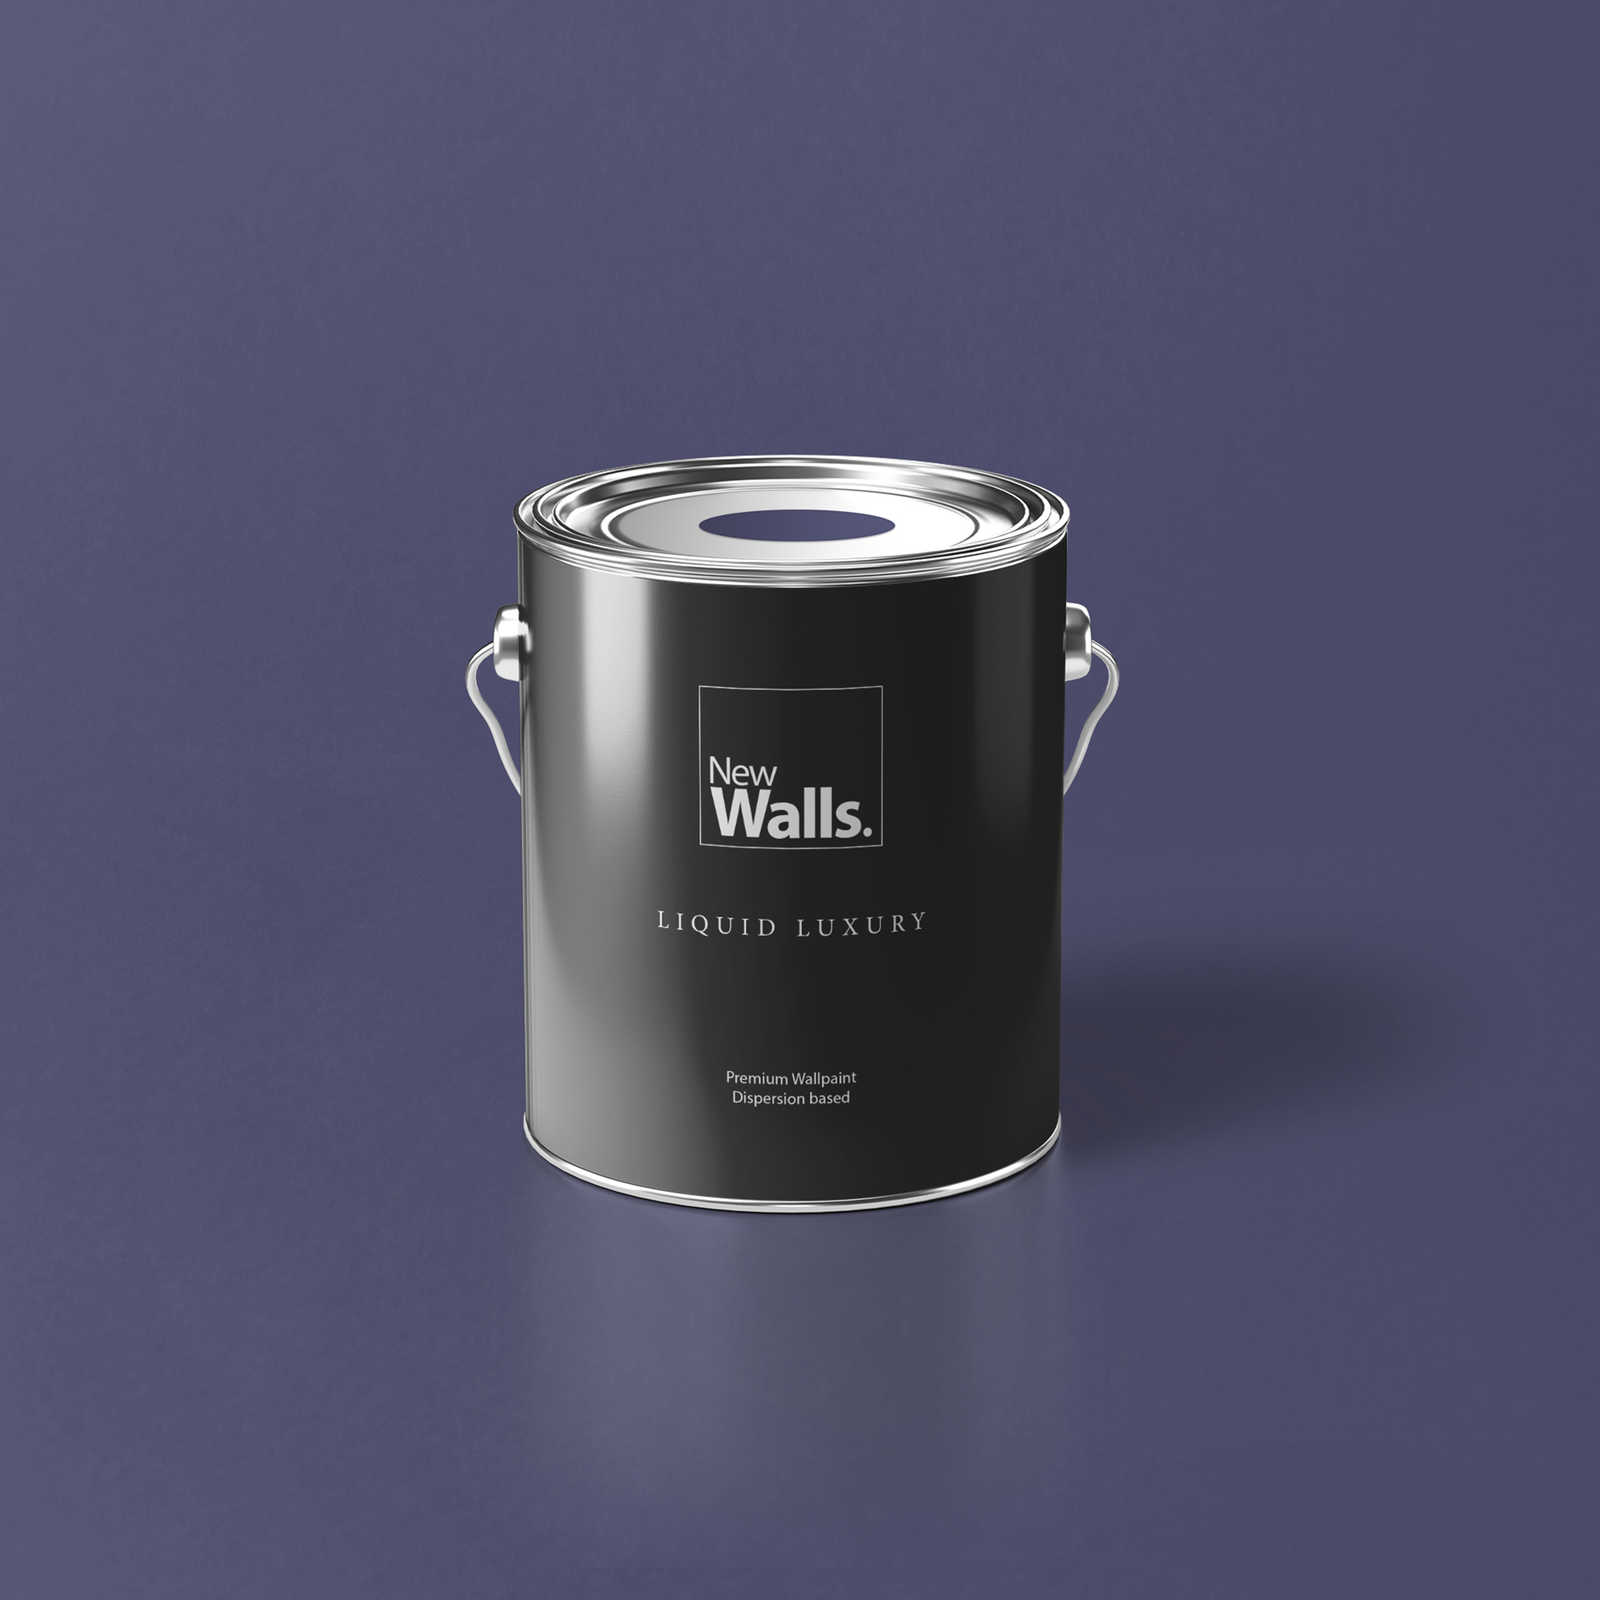 Premium Wall Paint Heavenly Dukellila »Magical Mauve« NW205 – 2.5 litre
